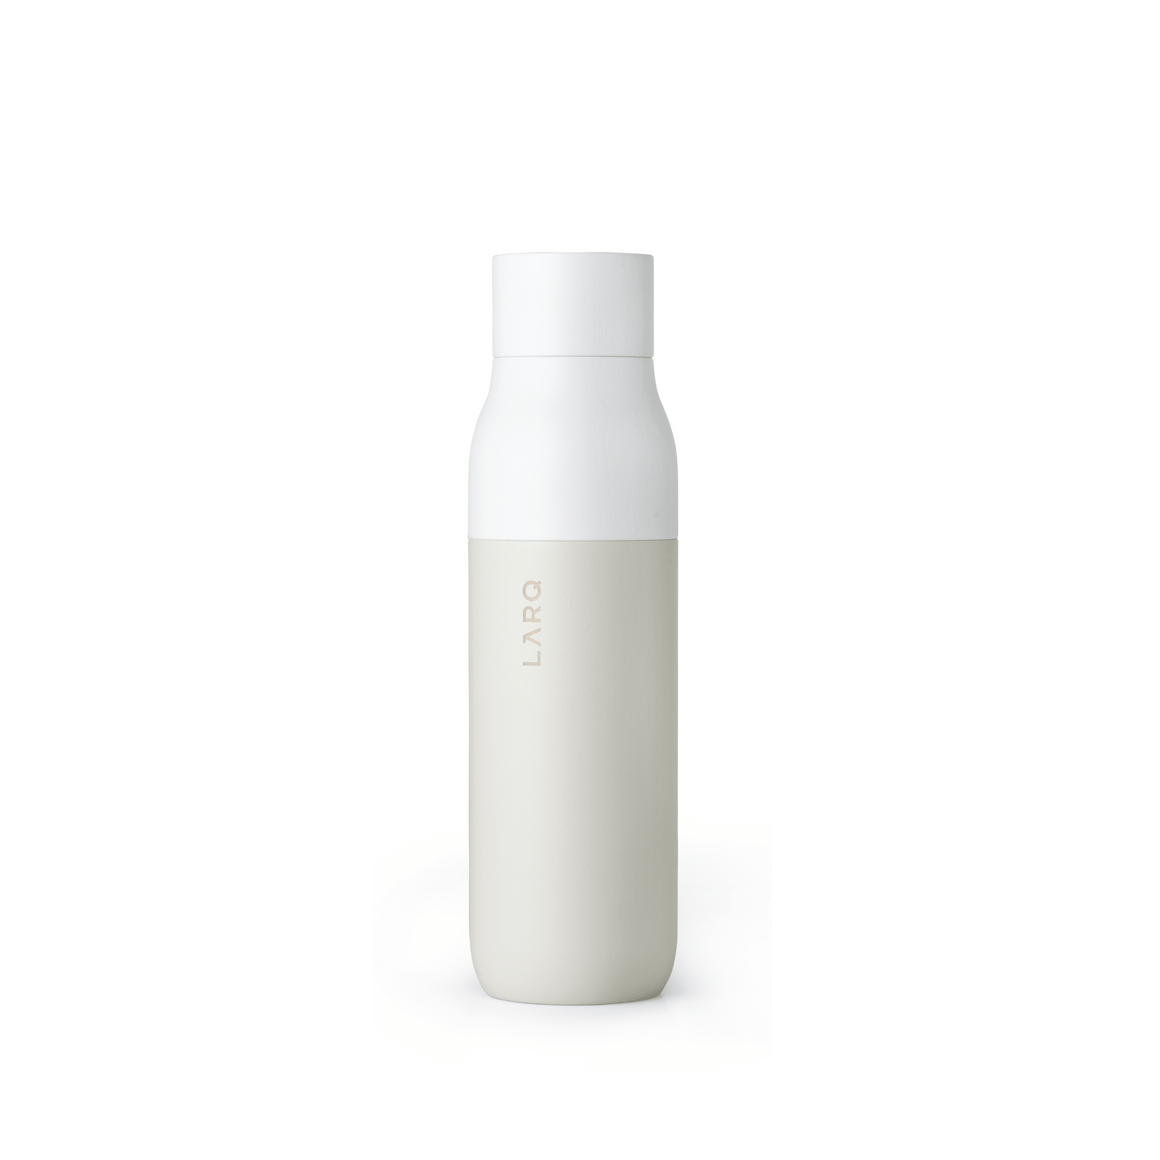 LARQ Bottle PureVis (Insulated)